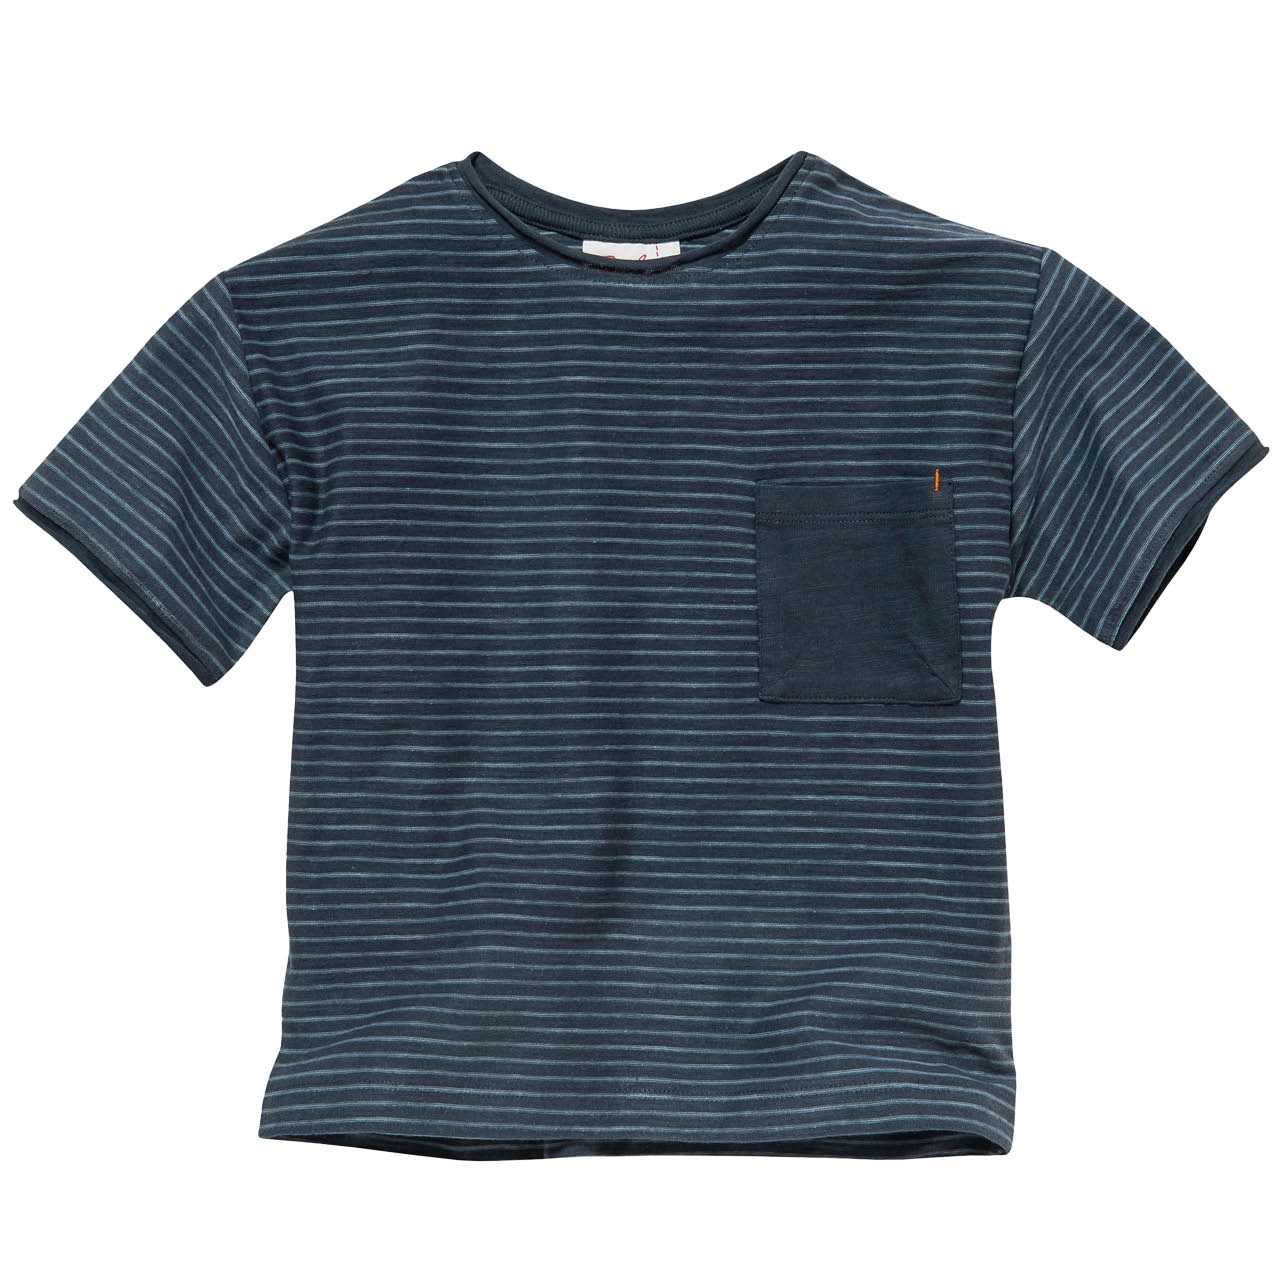 Leichtes Ringel T-Shirt dunkelblau geringelt